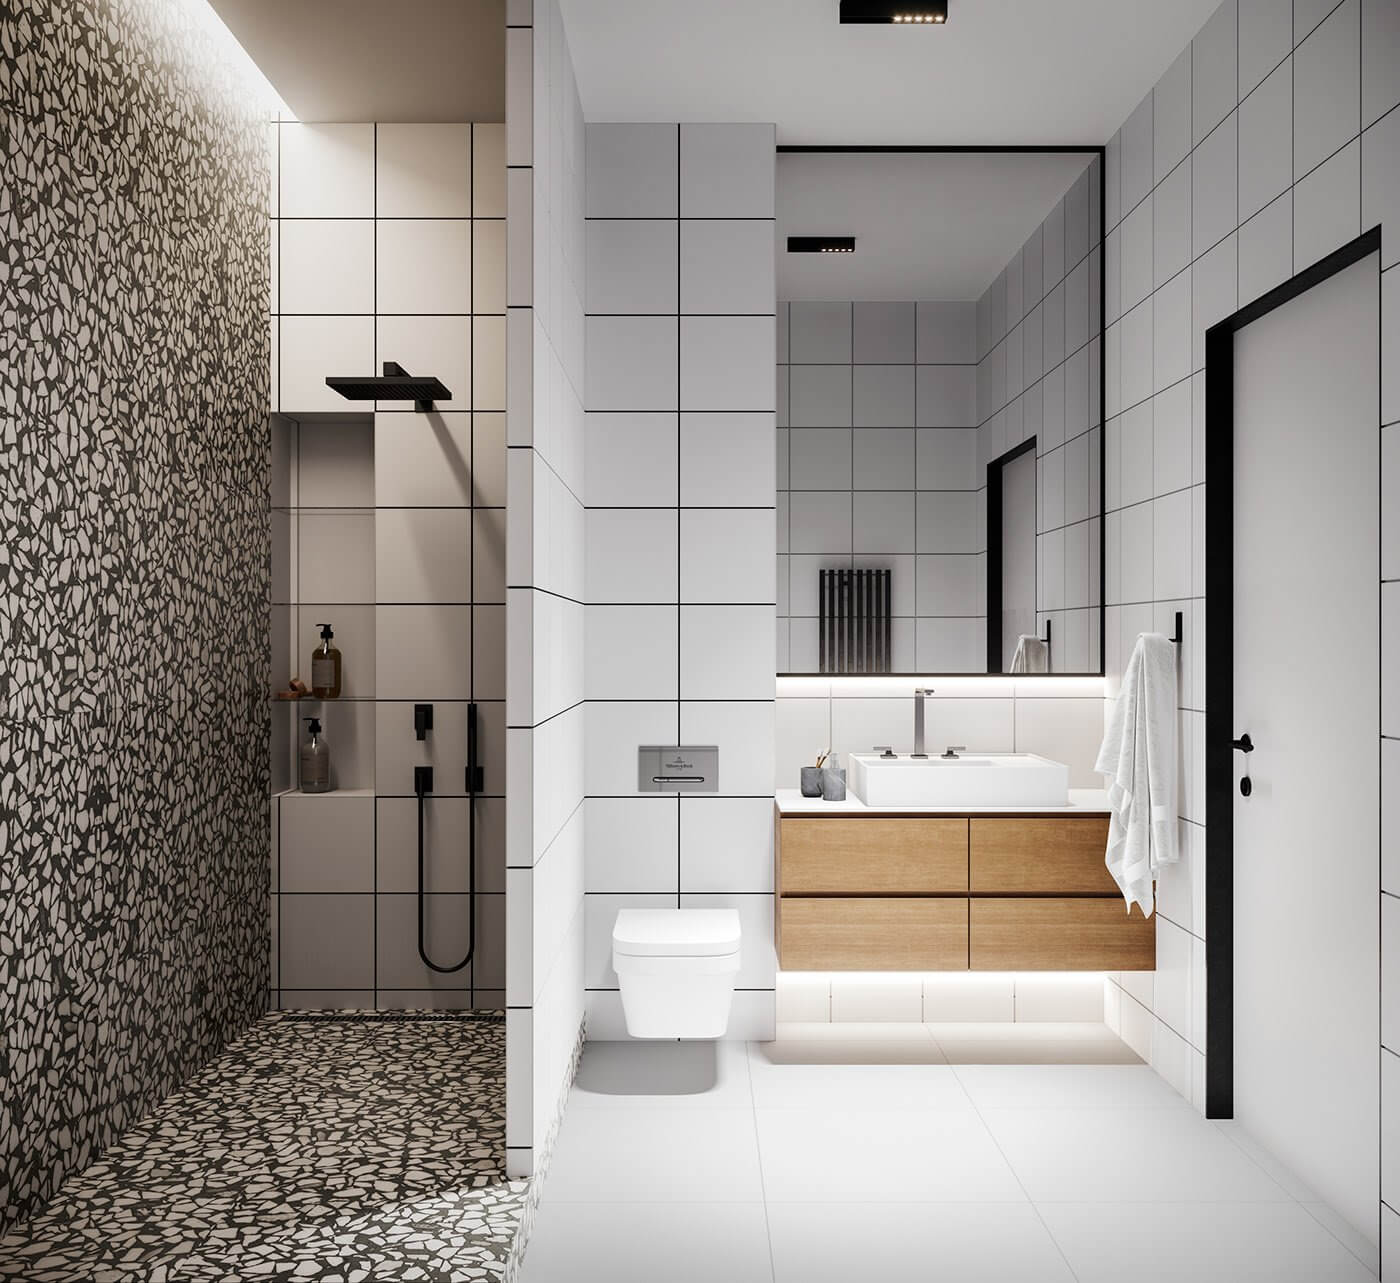 Zalomowa house bathroom shower - cgi visualization